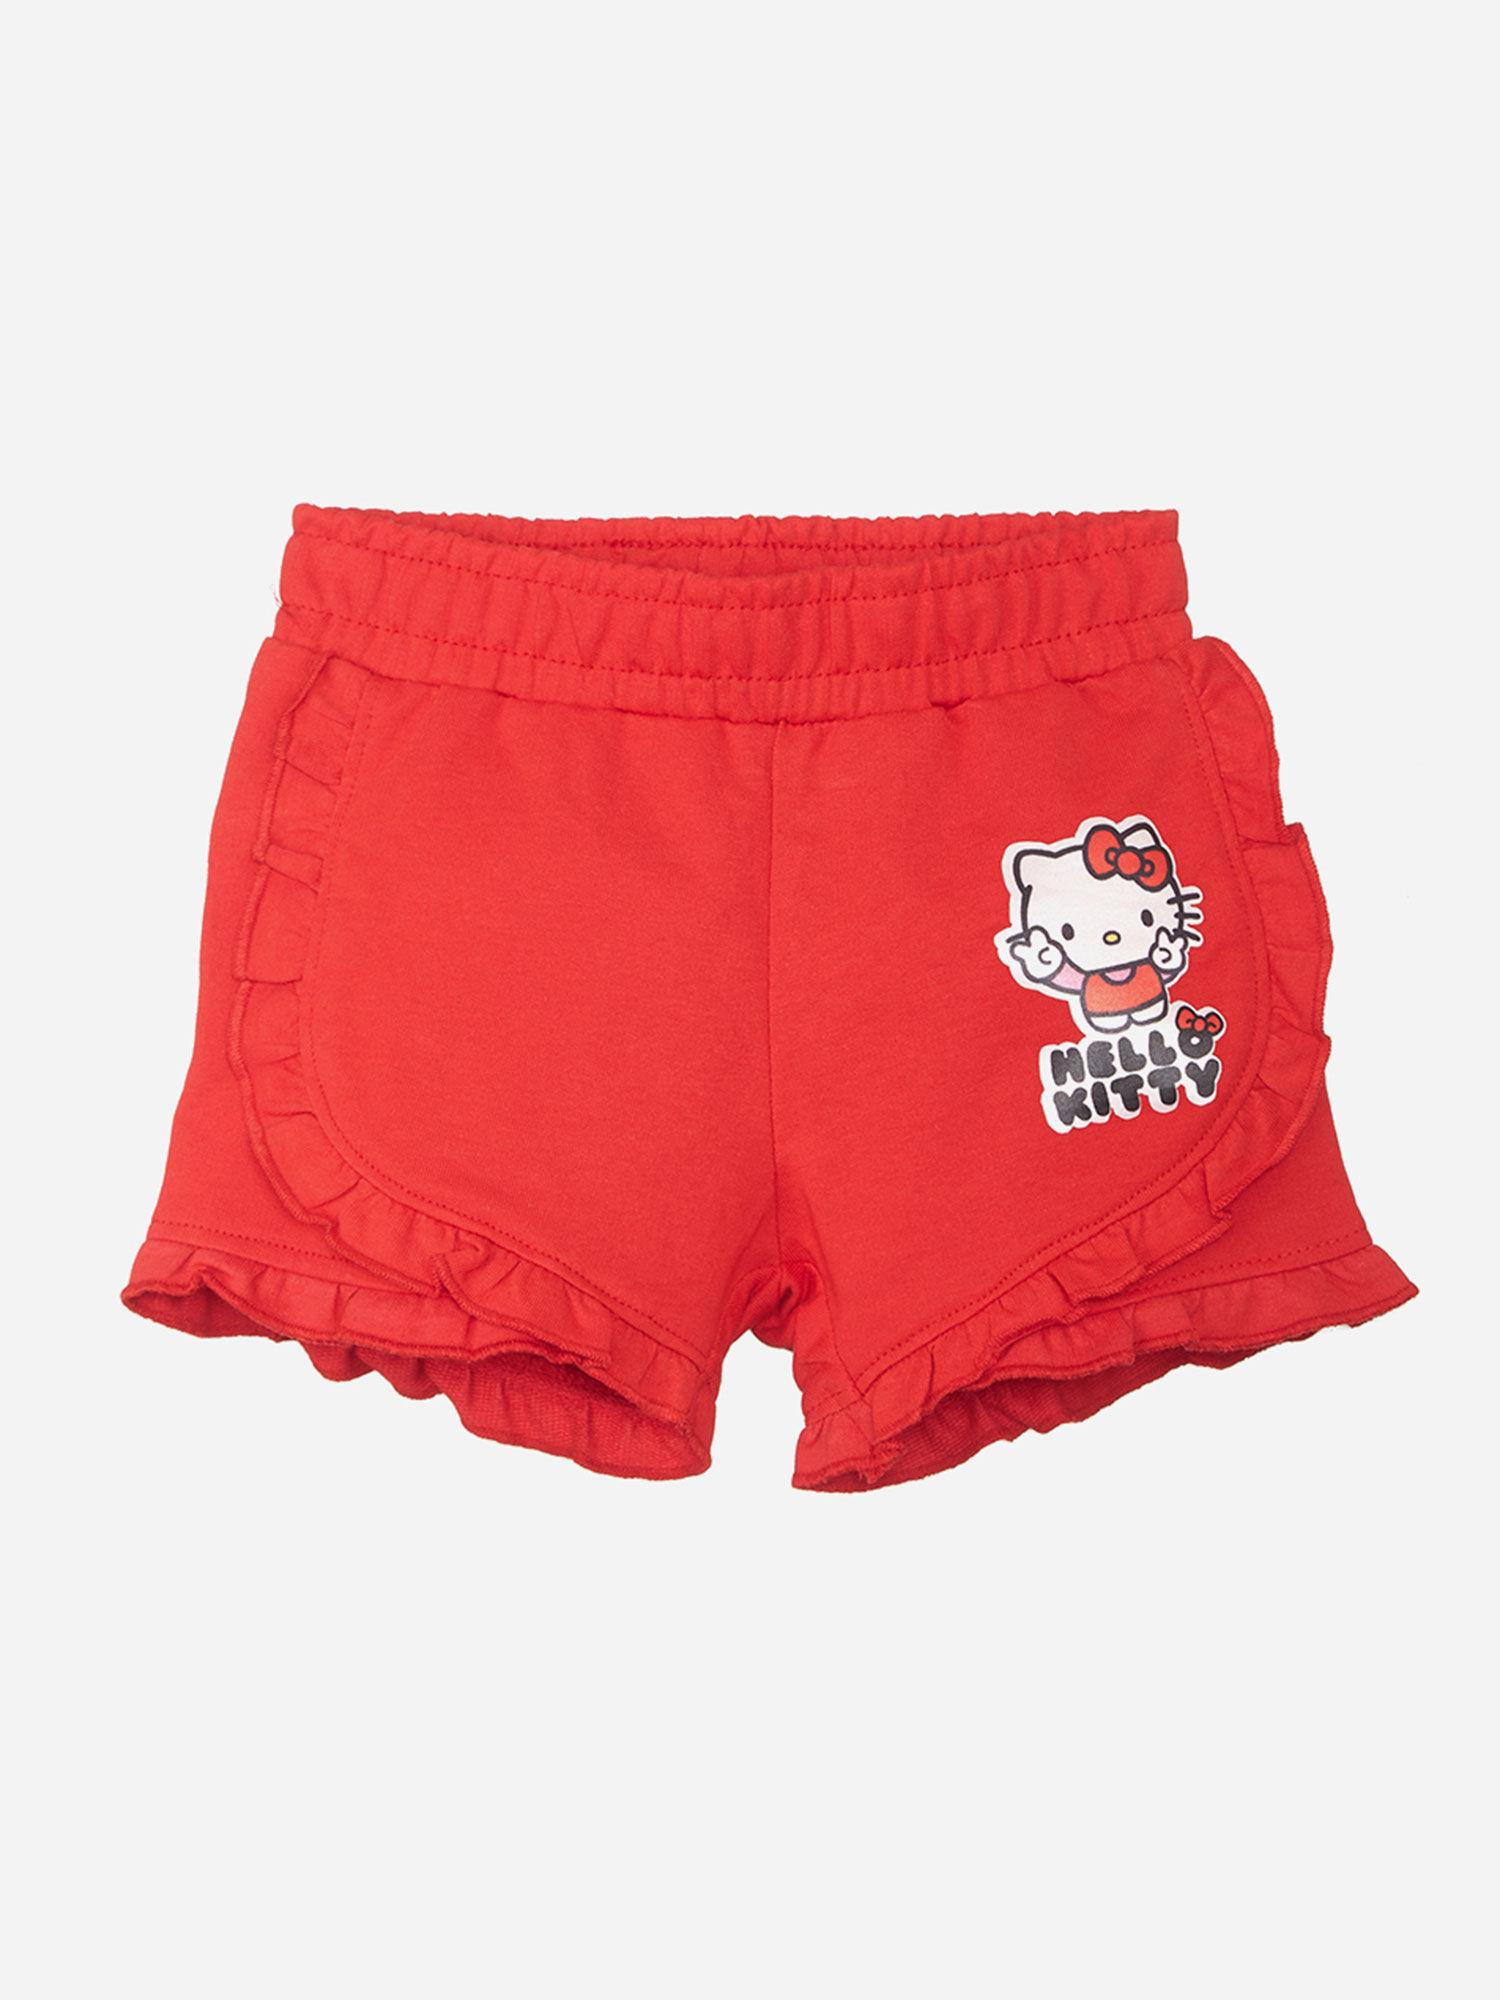 hello-kitty-red-shorts